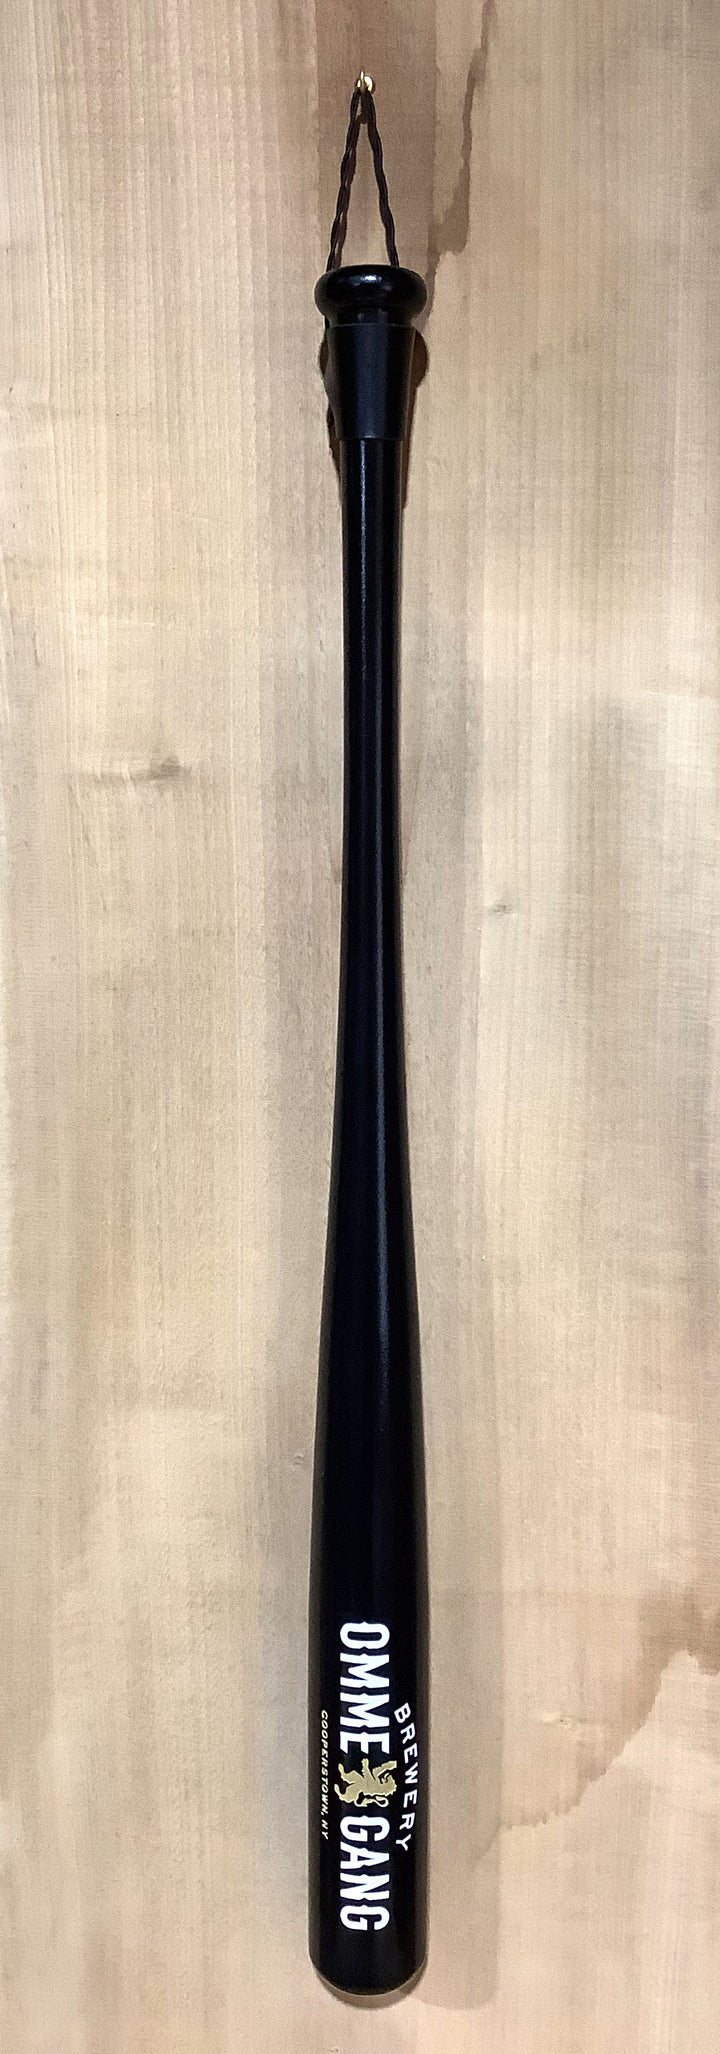 Custom Engraved & Hand Painted Wood Trophy Bat "Ommegang"